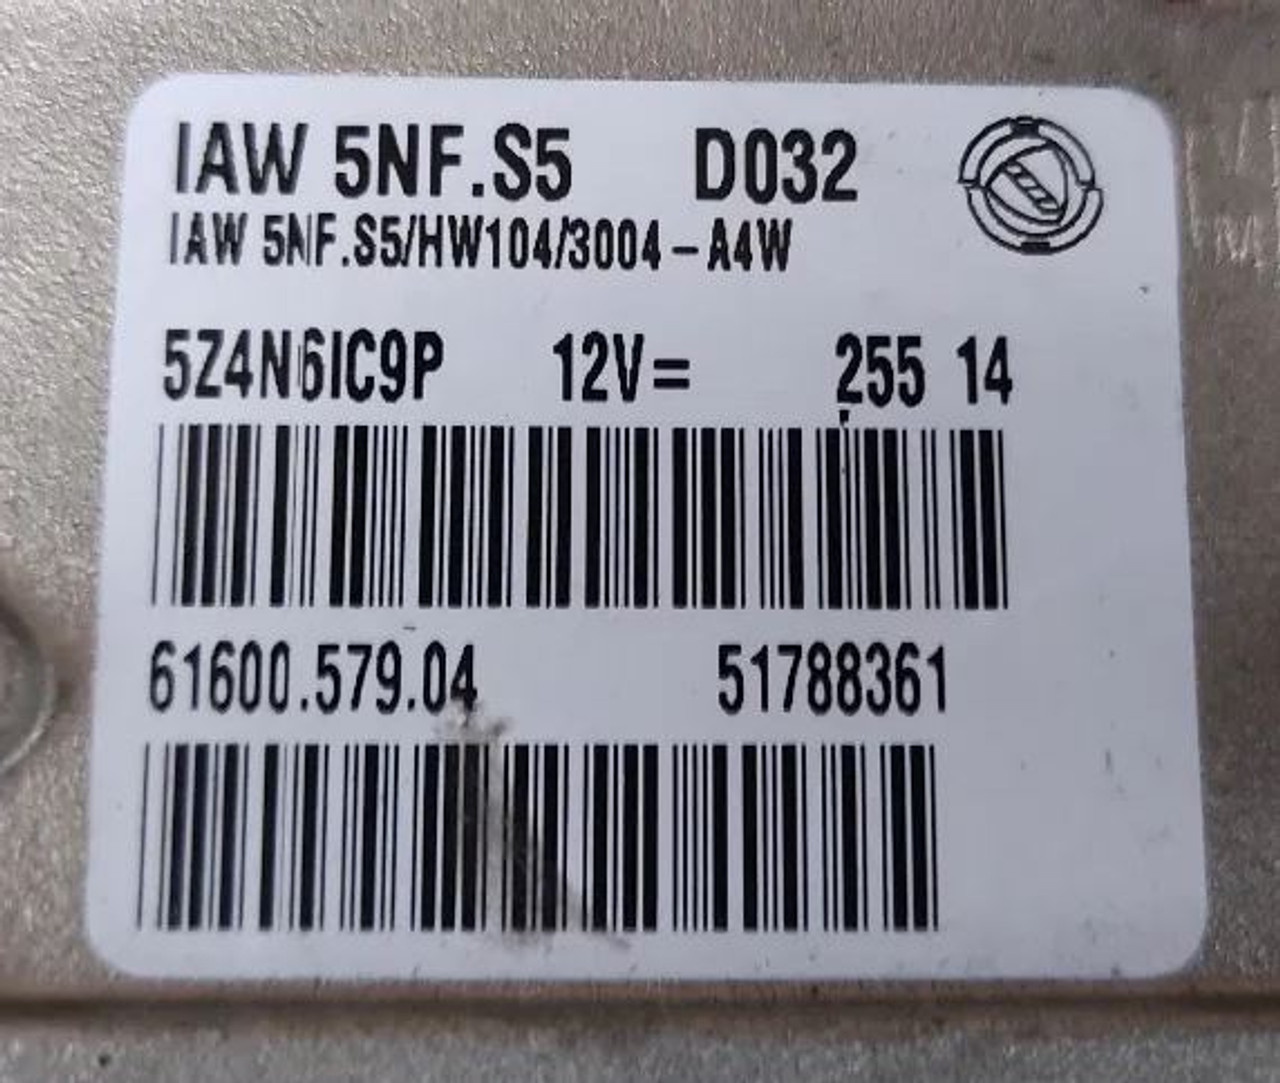 Fiat Panda 2006, IAW5NFS5, IAW 5NF.S5, 51788361, 6160057904, 61600.579.04